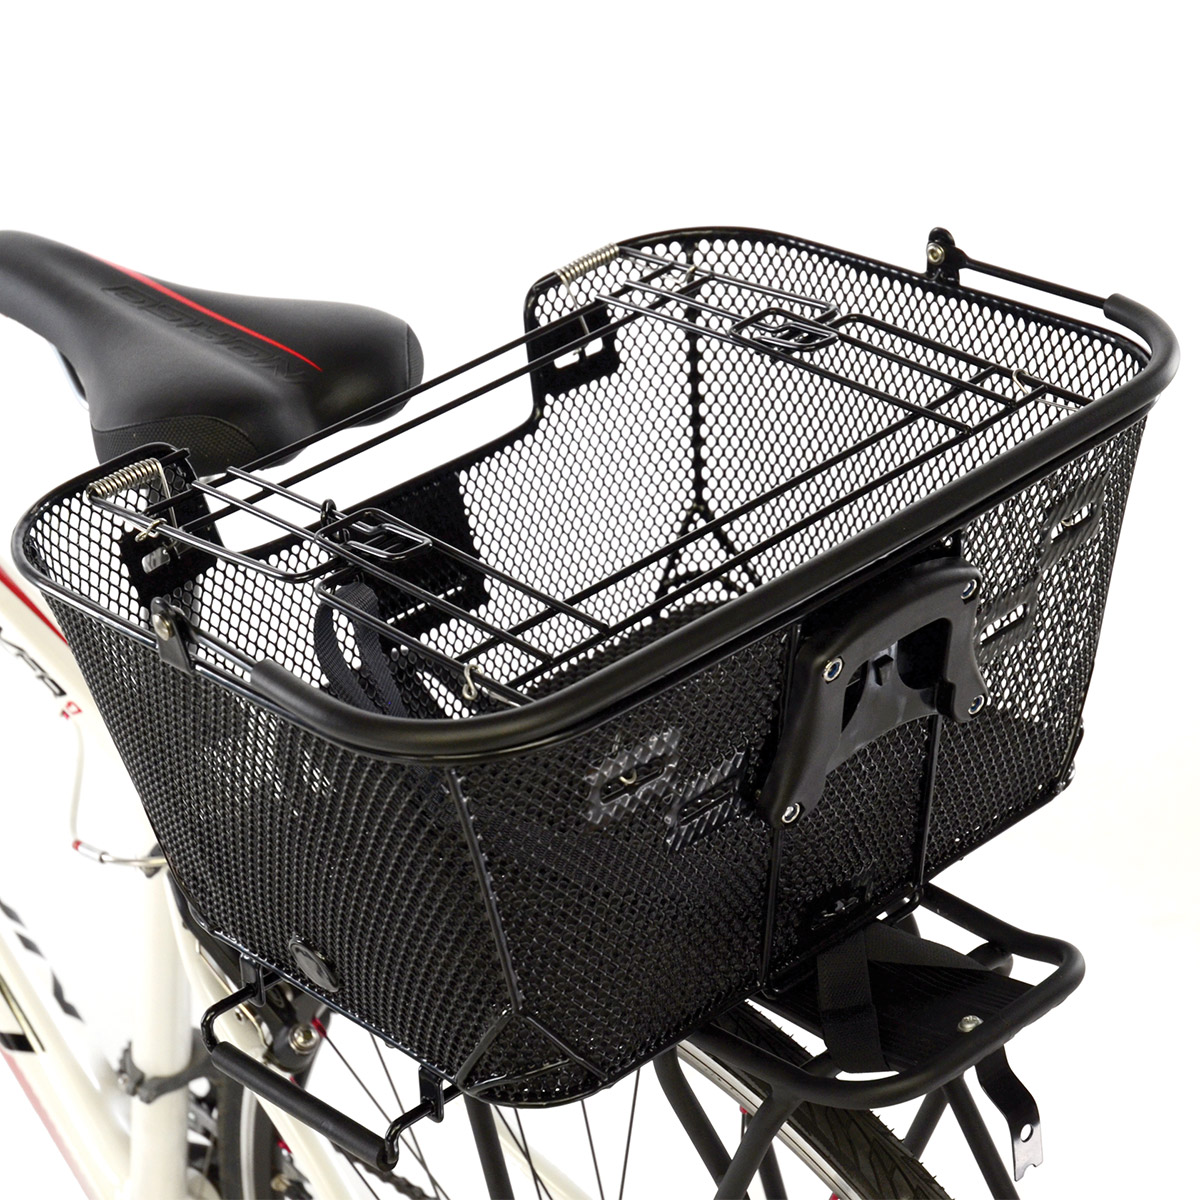 Qr Dual Function Premium Pet Basket Pet Baskets Baskets Products Axiom Cycling Gear